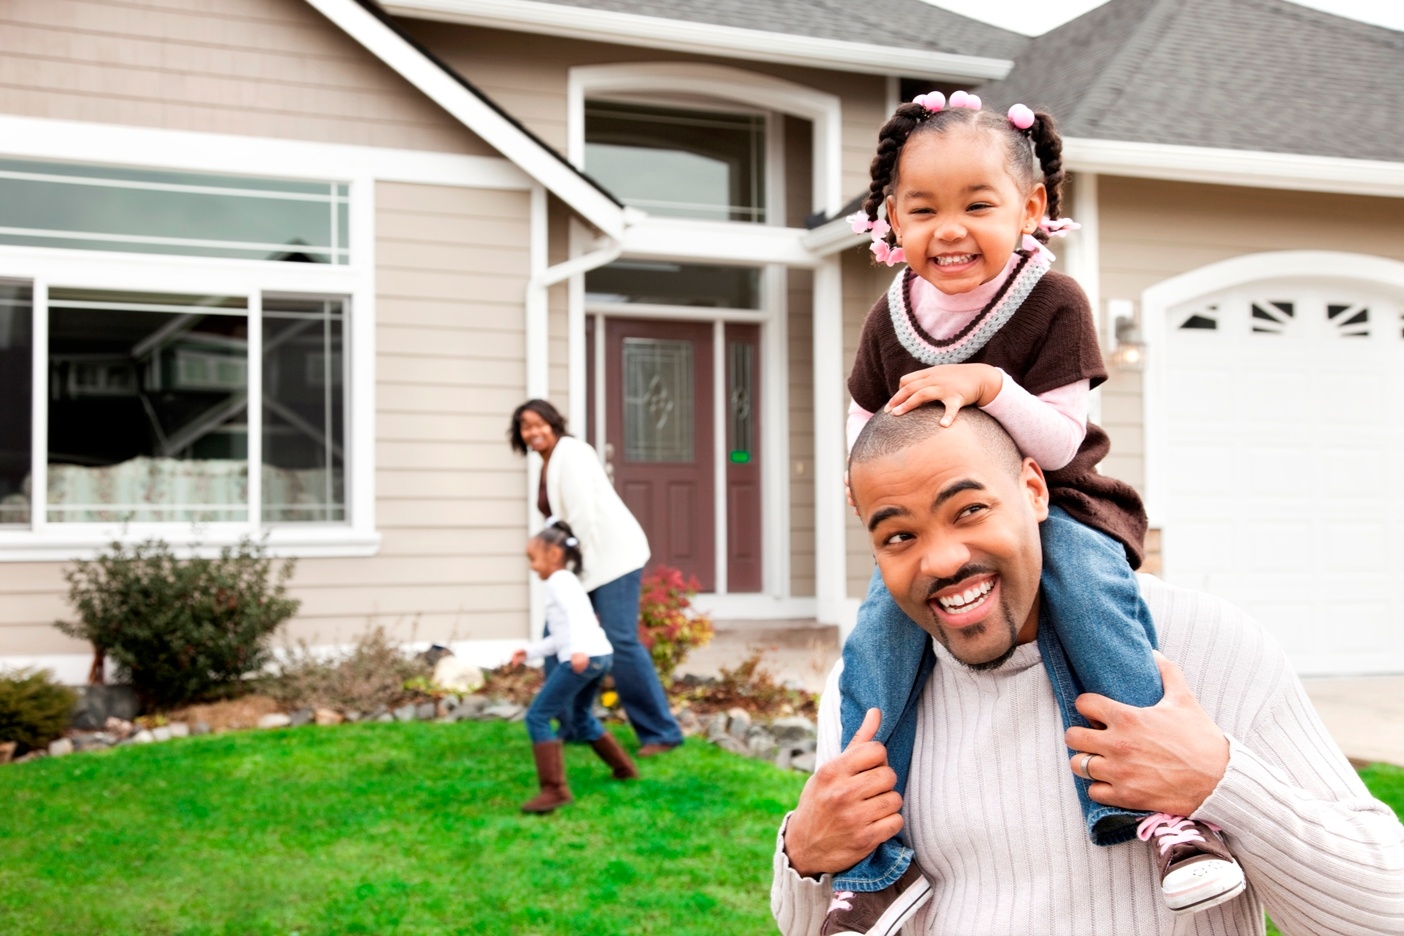 4 GovPilot Processes for a Family Friendly Neighborhood